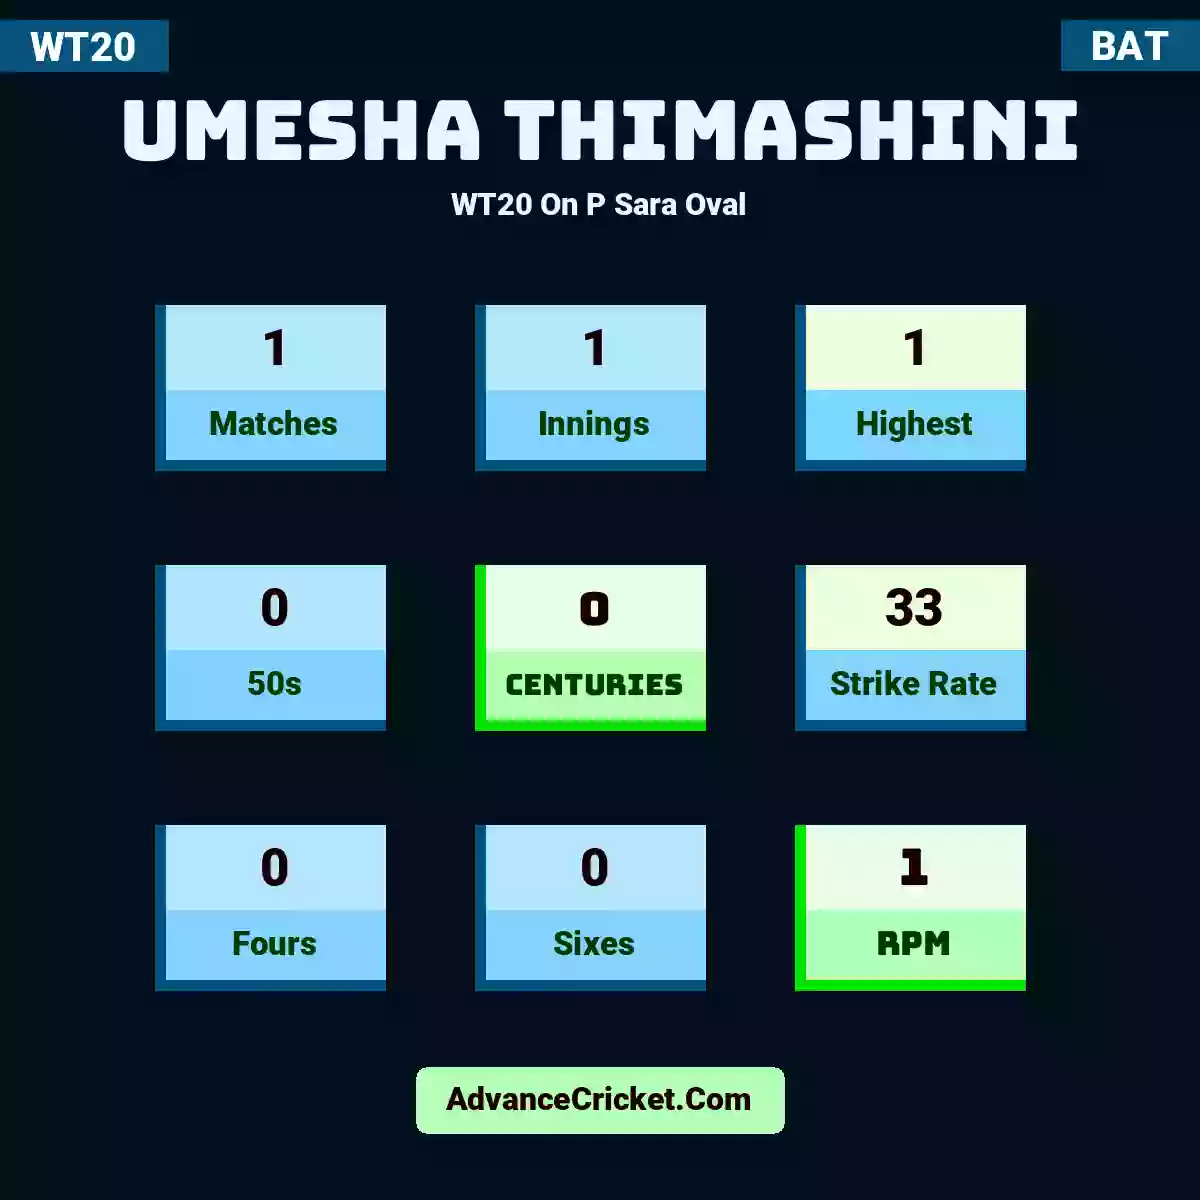 Umesha Thimashini WT20  On P Sara Oval, Umesha Thimashini played 1 matches, scored 1 runs as highest, 0 half-centuries, and 0 centuries, with a strike rate of 33. U.Thimashini hit 0 fours and 0 sixes, with an RPM of 1.